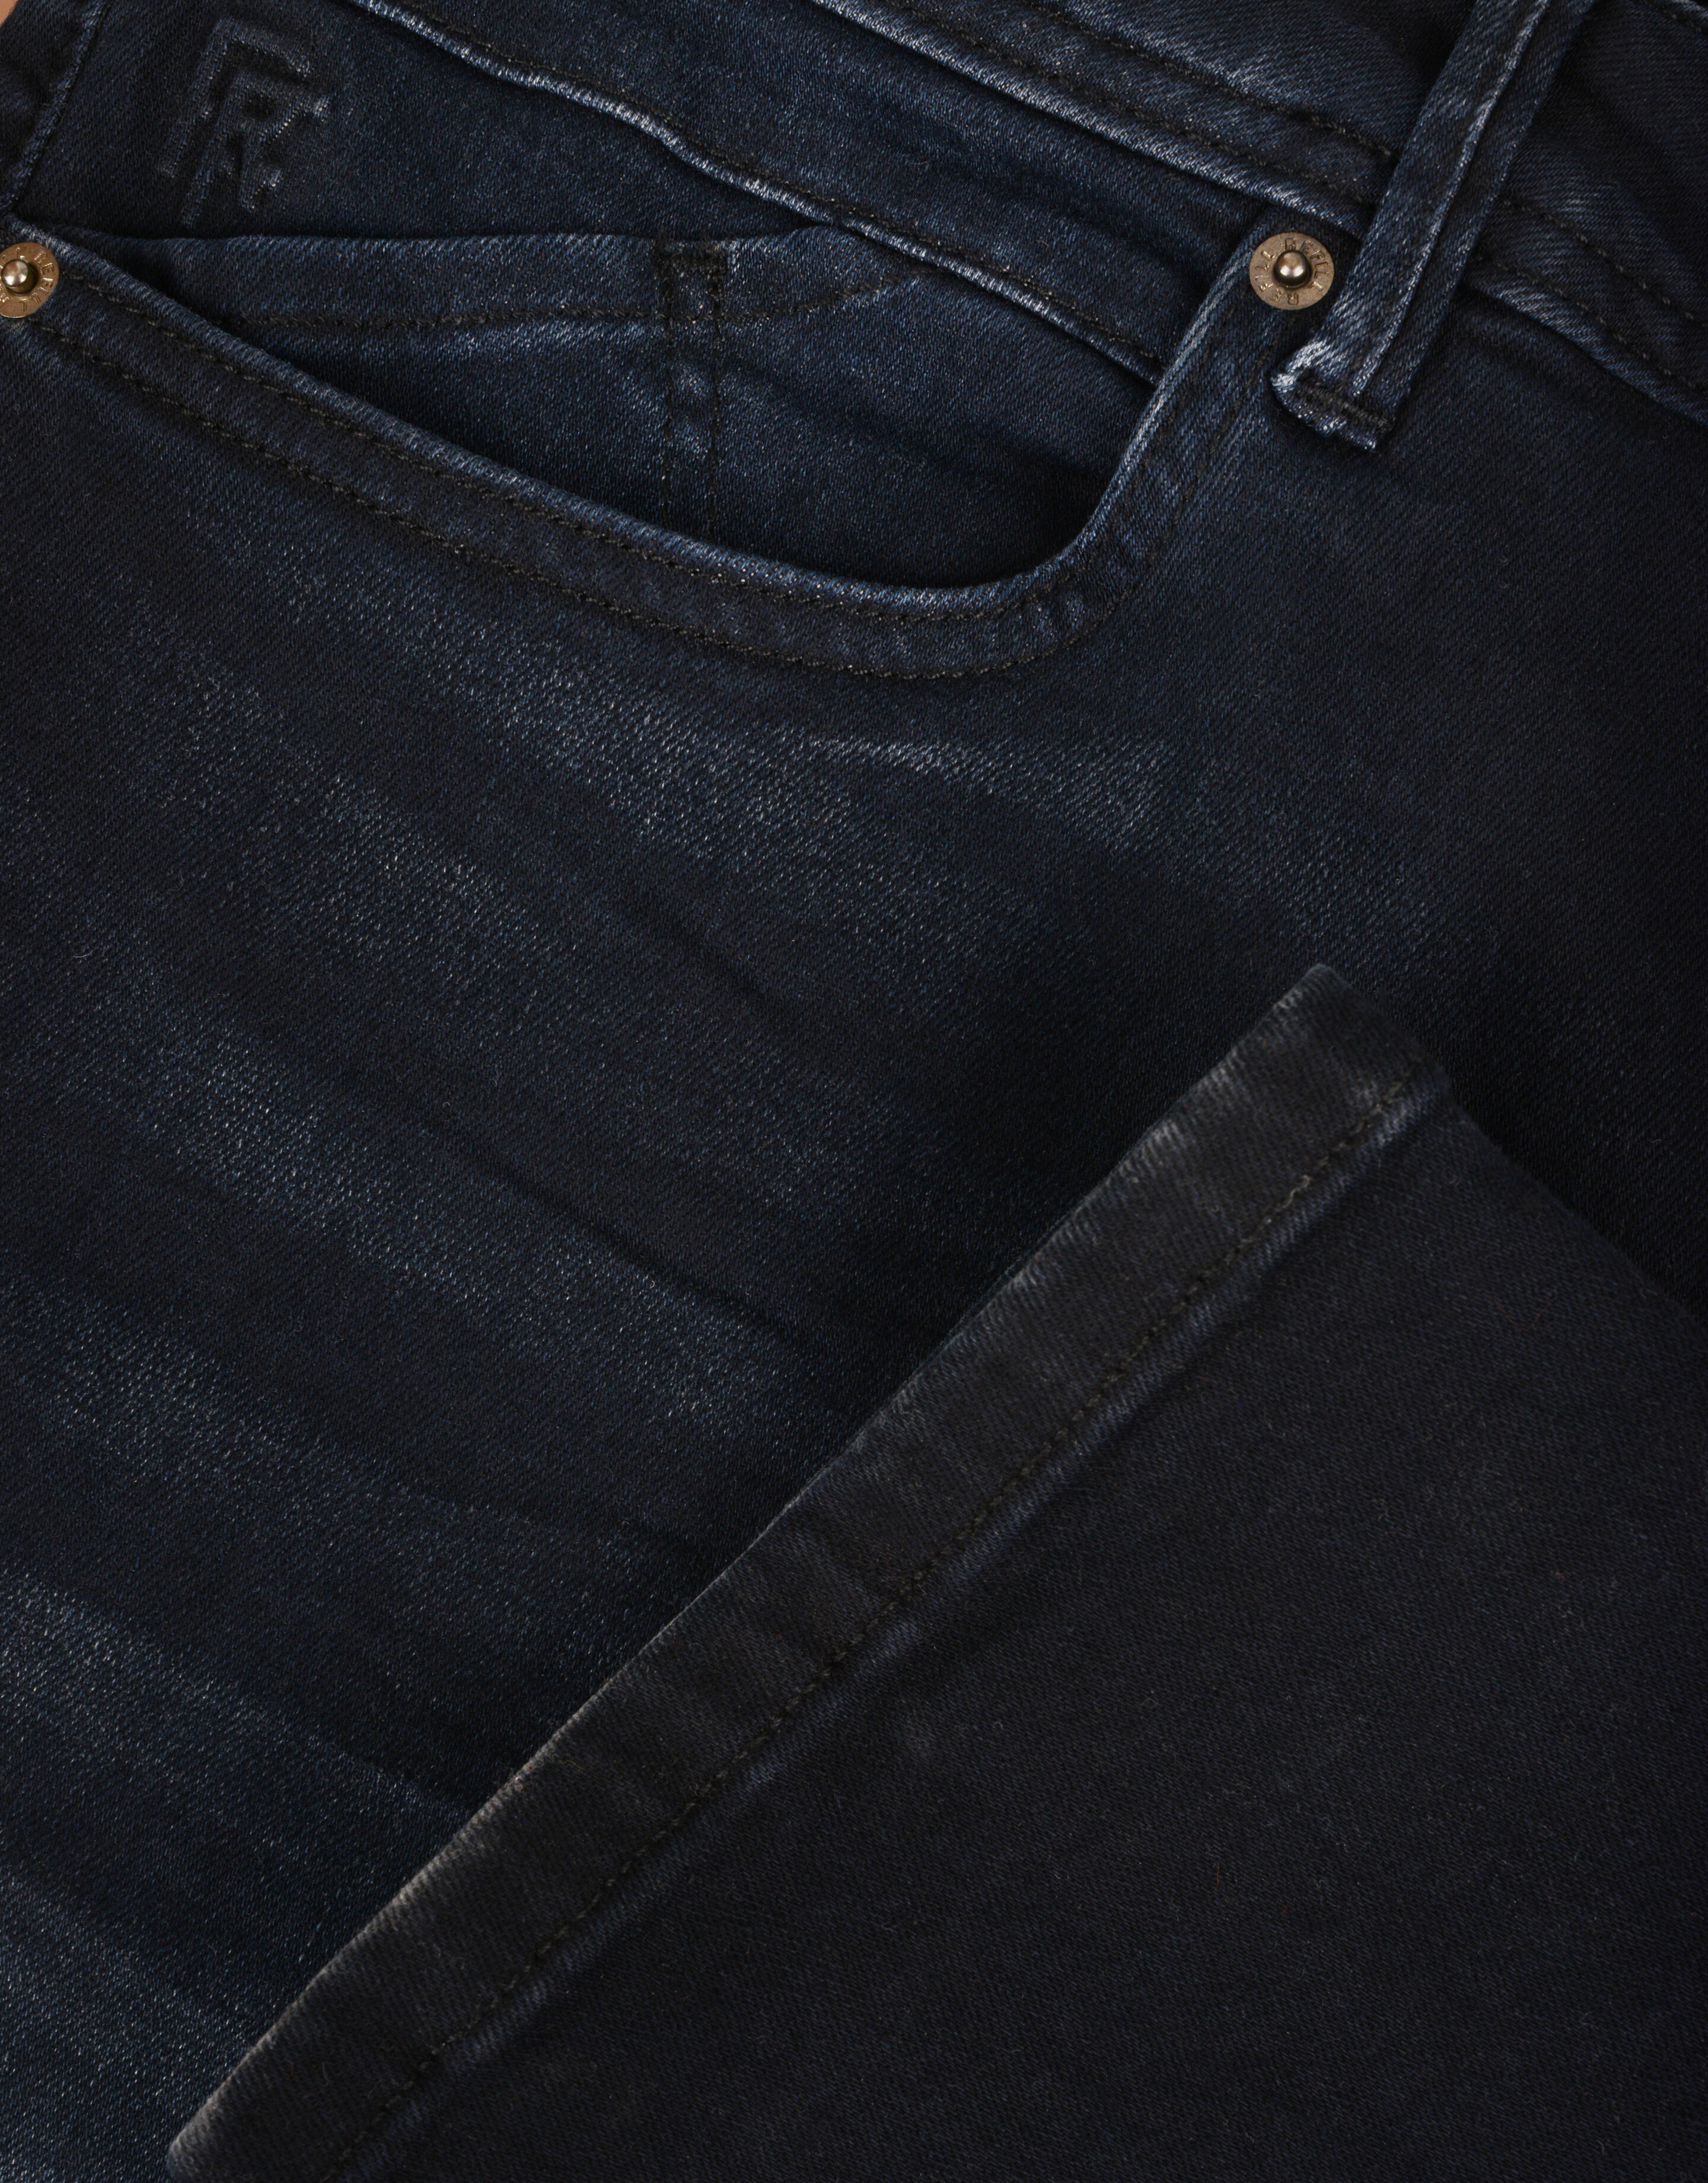 Lewis Straight Blue/Black Jeans L34 Refill